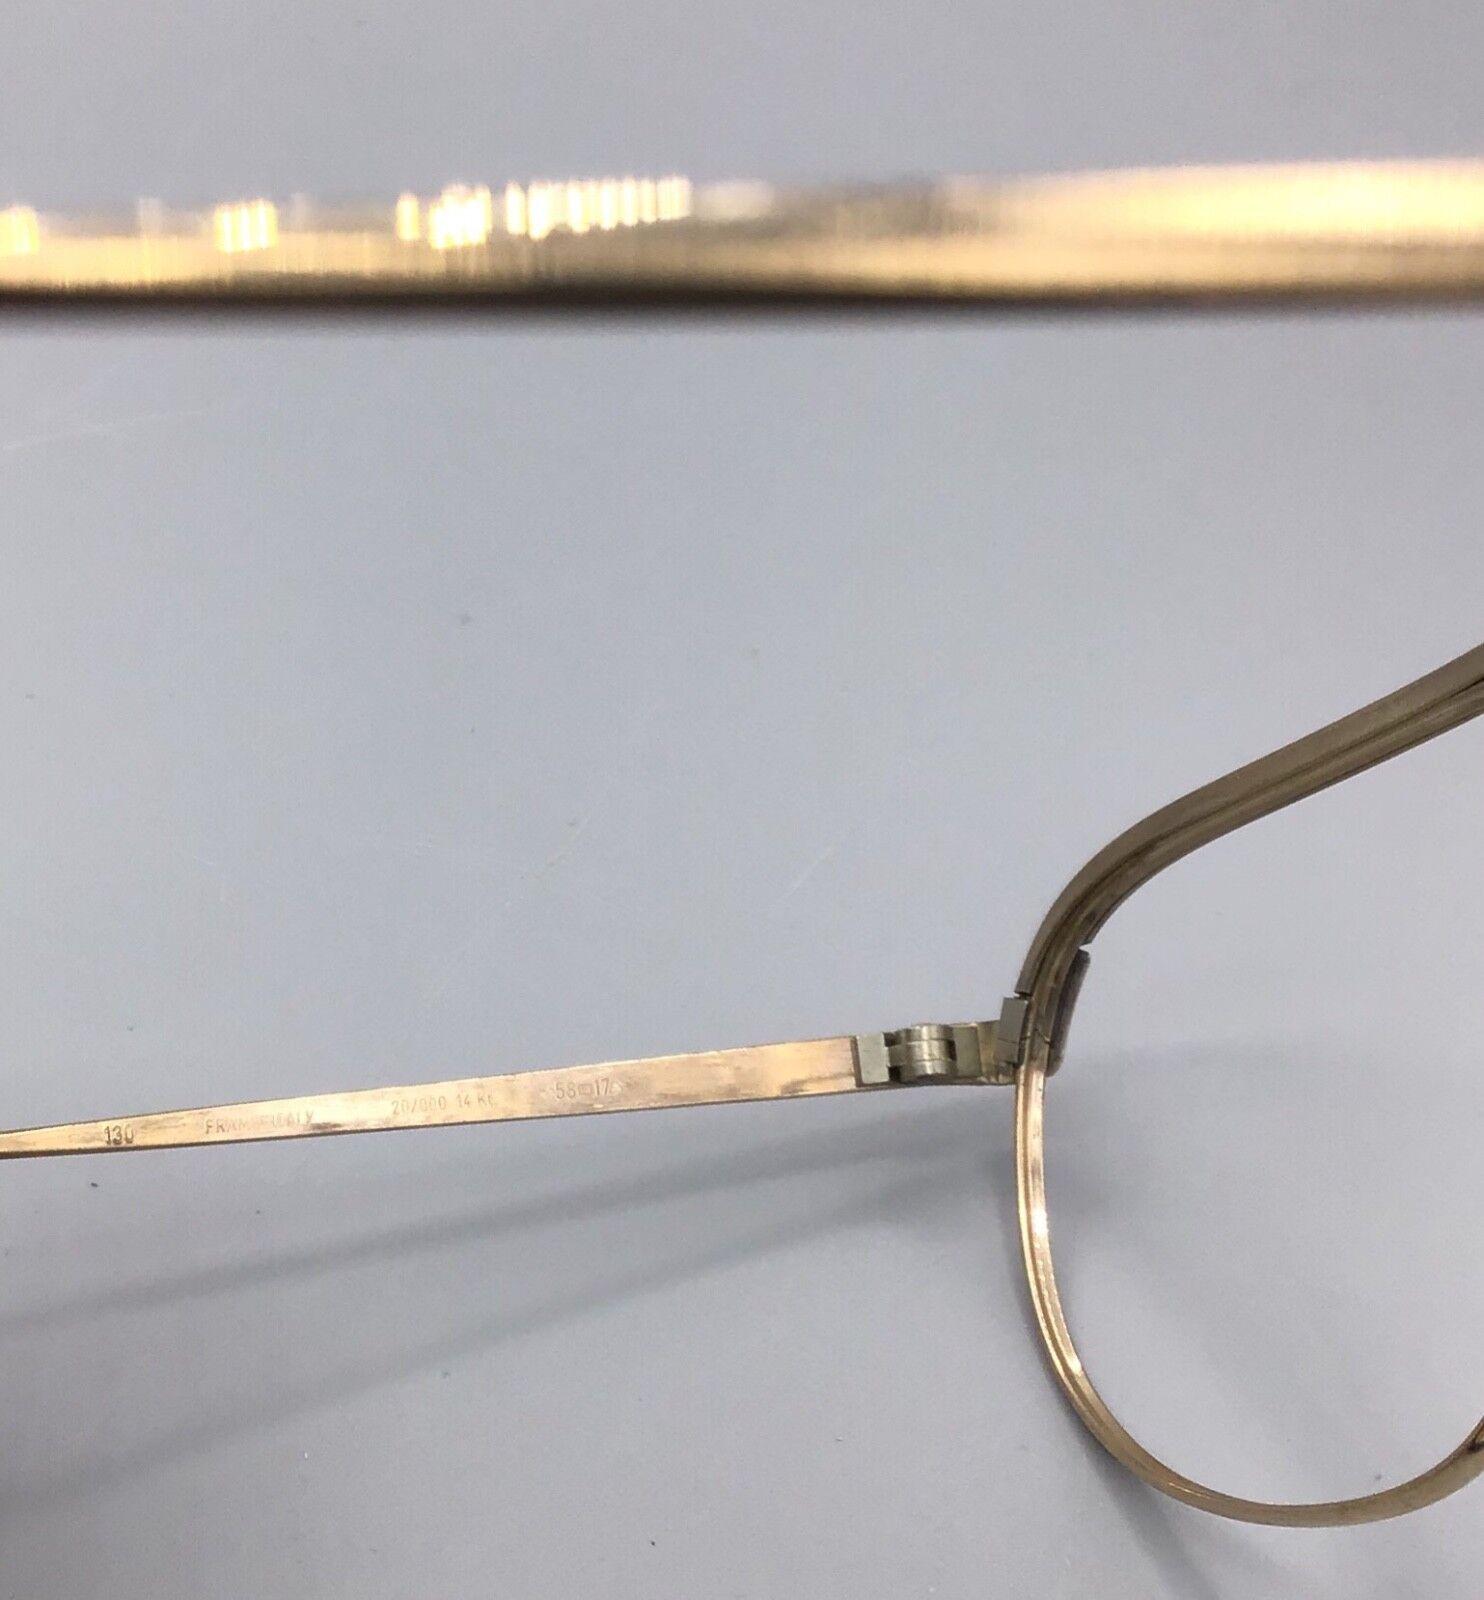 Lozza occhiale vintage eyewear frame brillen lunettes 20/000 14 Kt